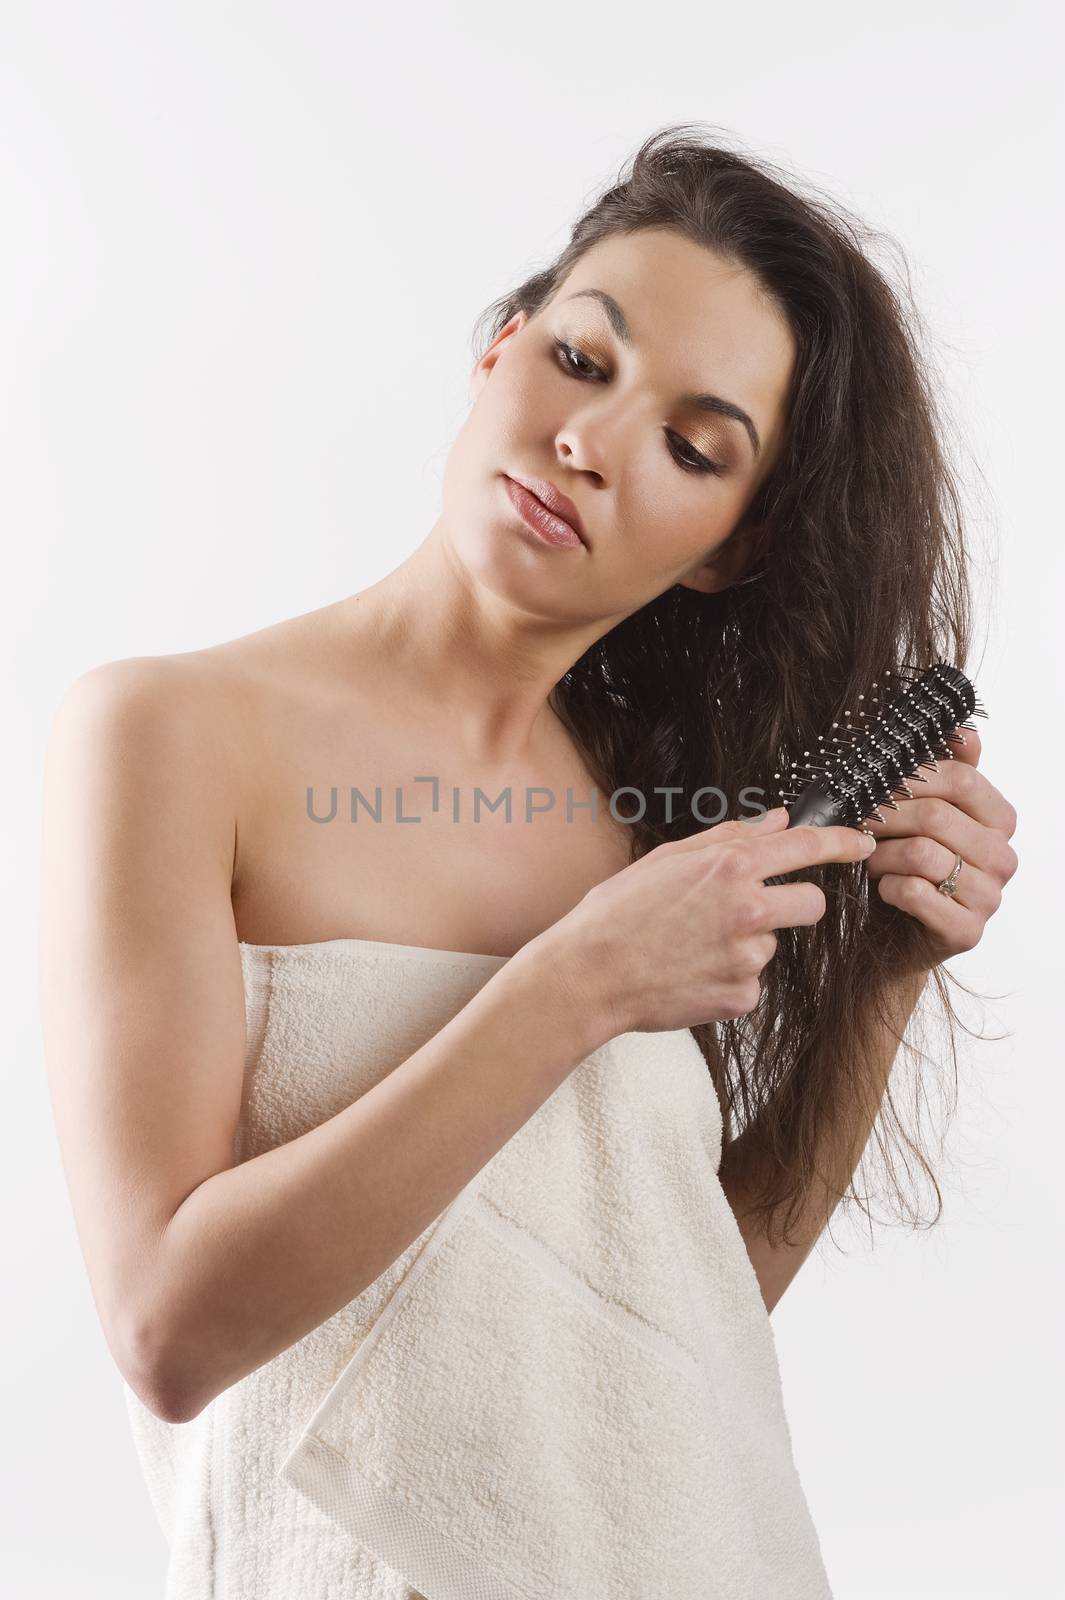 brushing hair by fotoCD